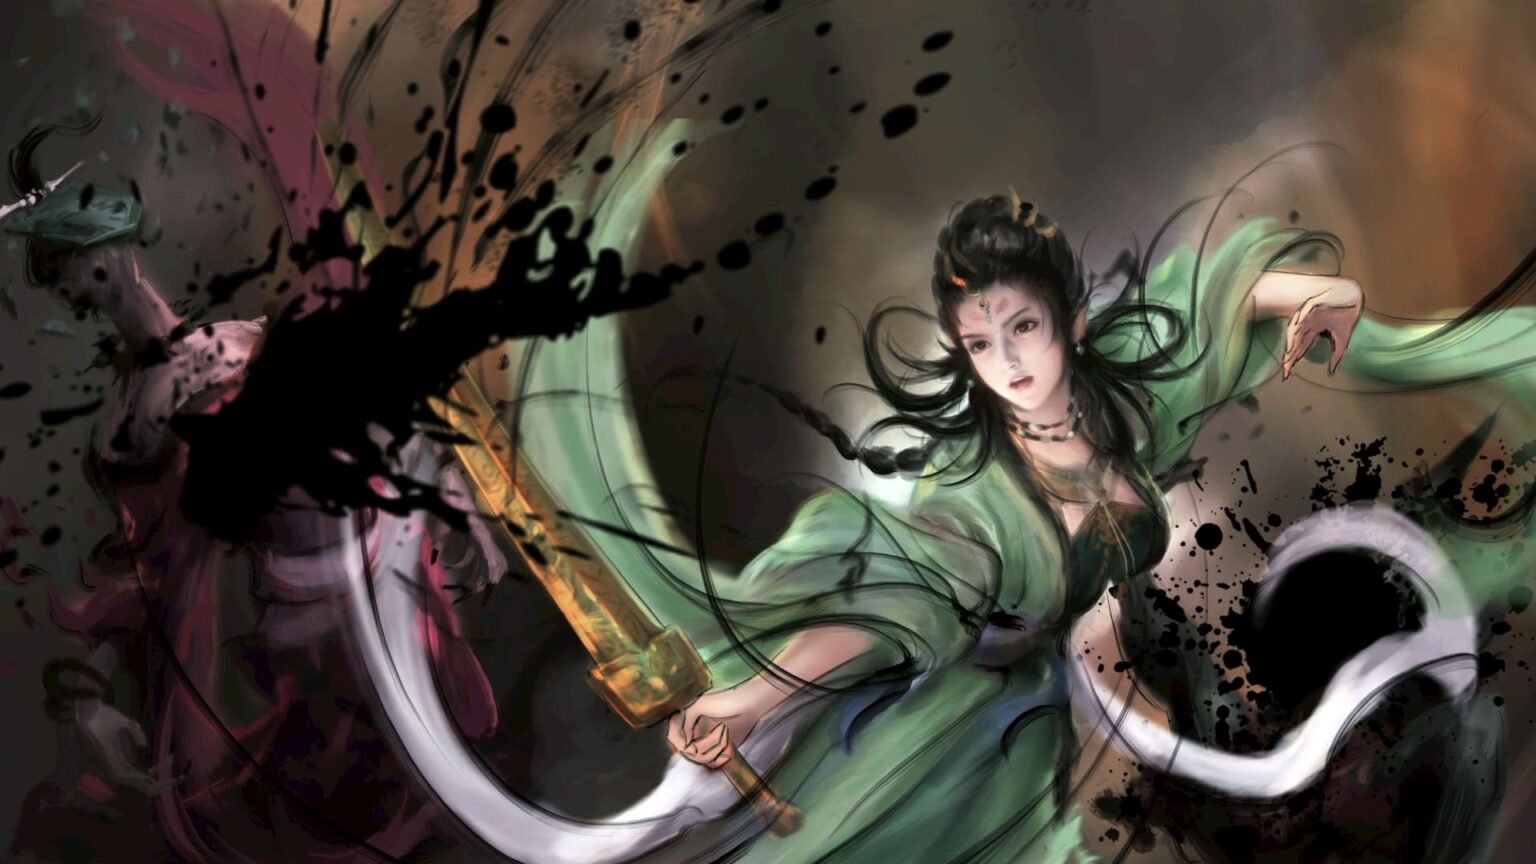 free Xuan-Yuan Sword VII